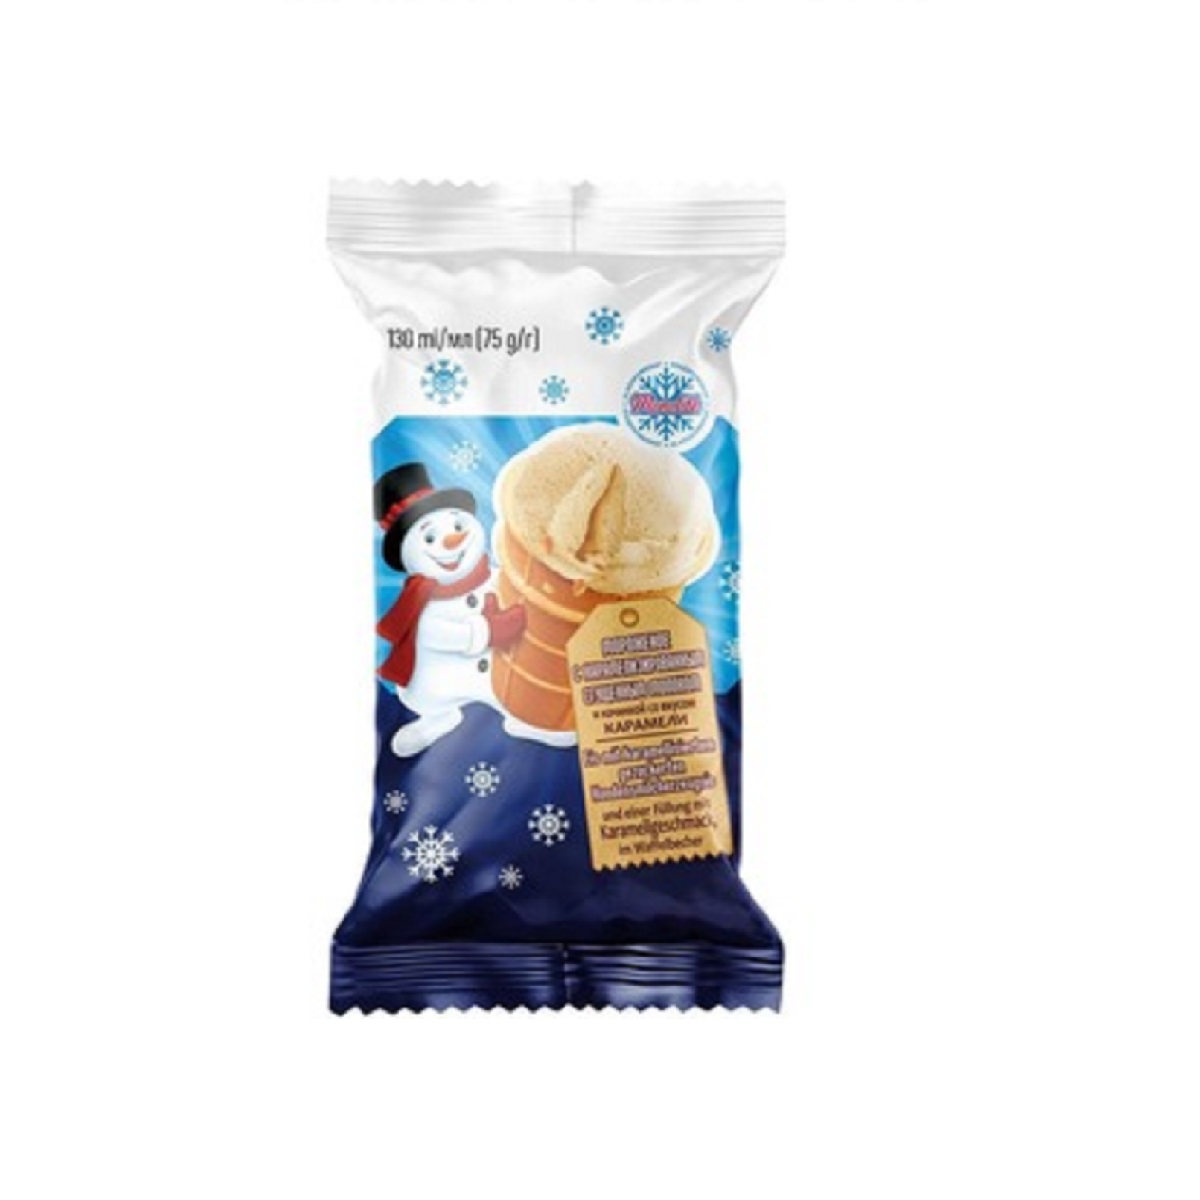 Snowman Ice Cream Condensed Milk in a waffle 120ml